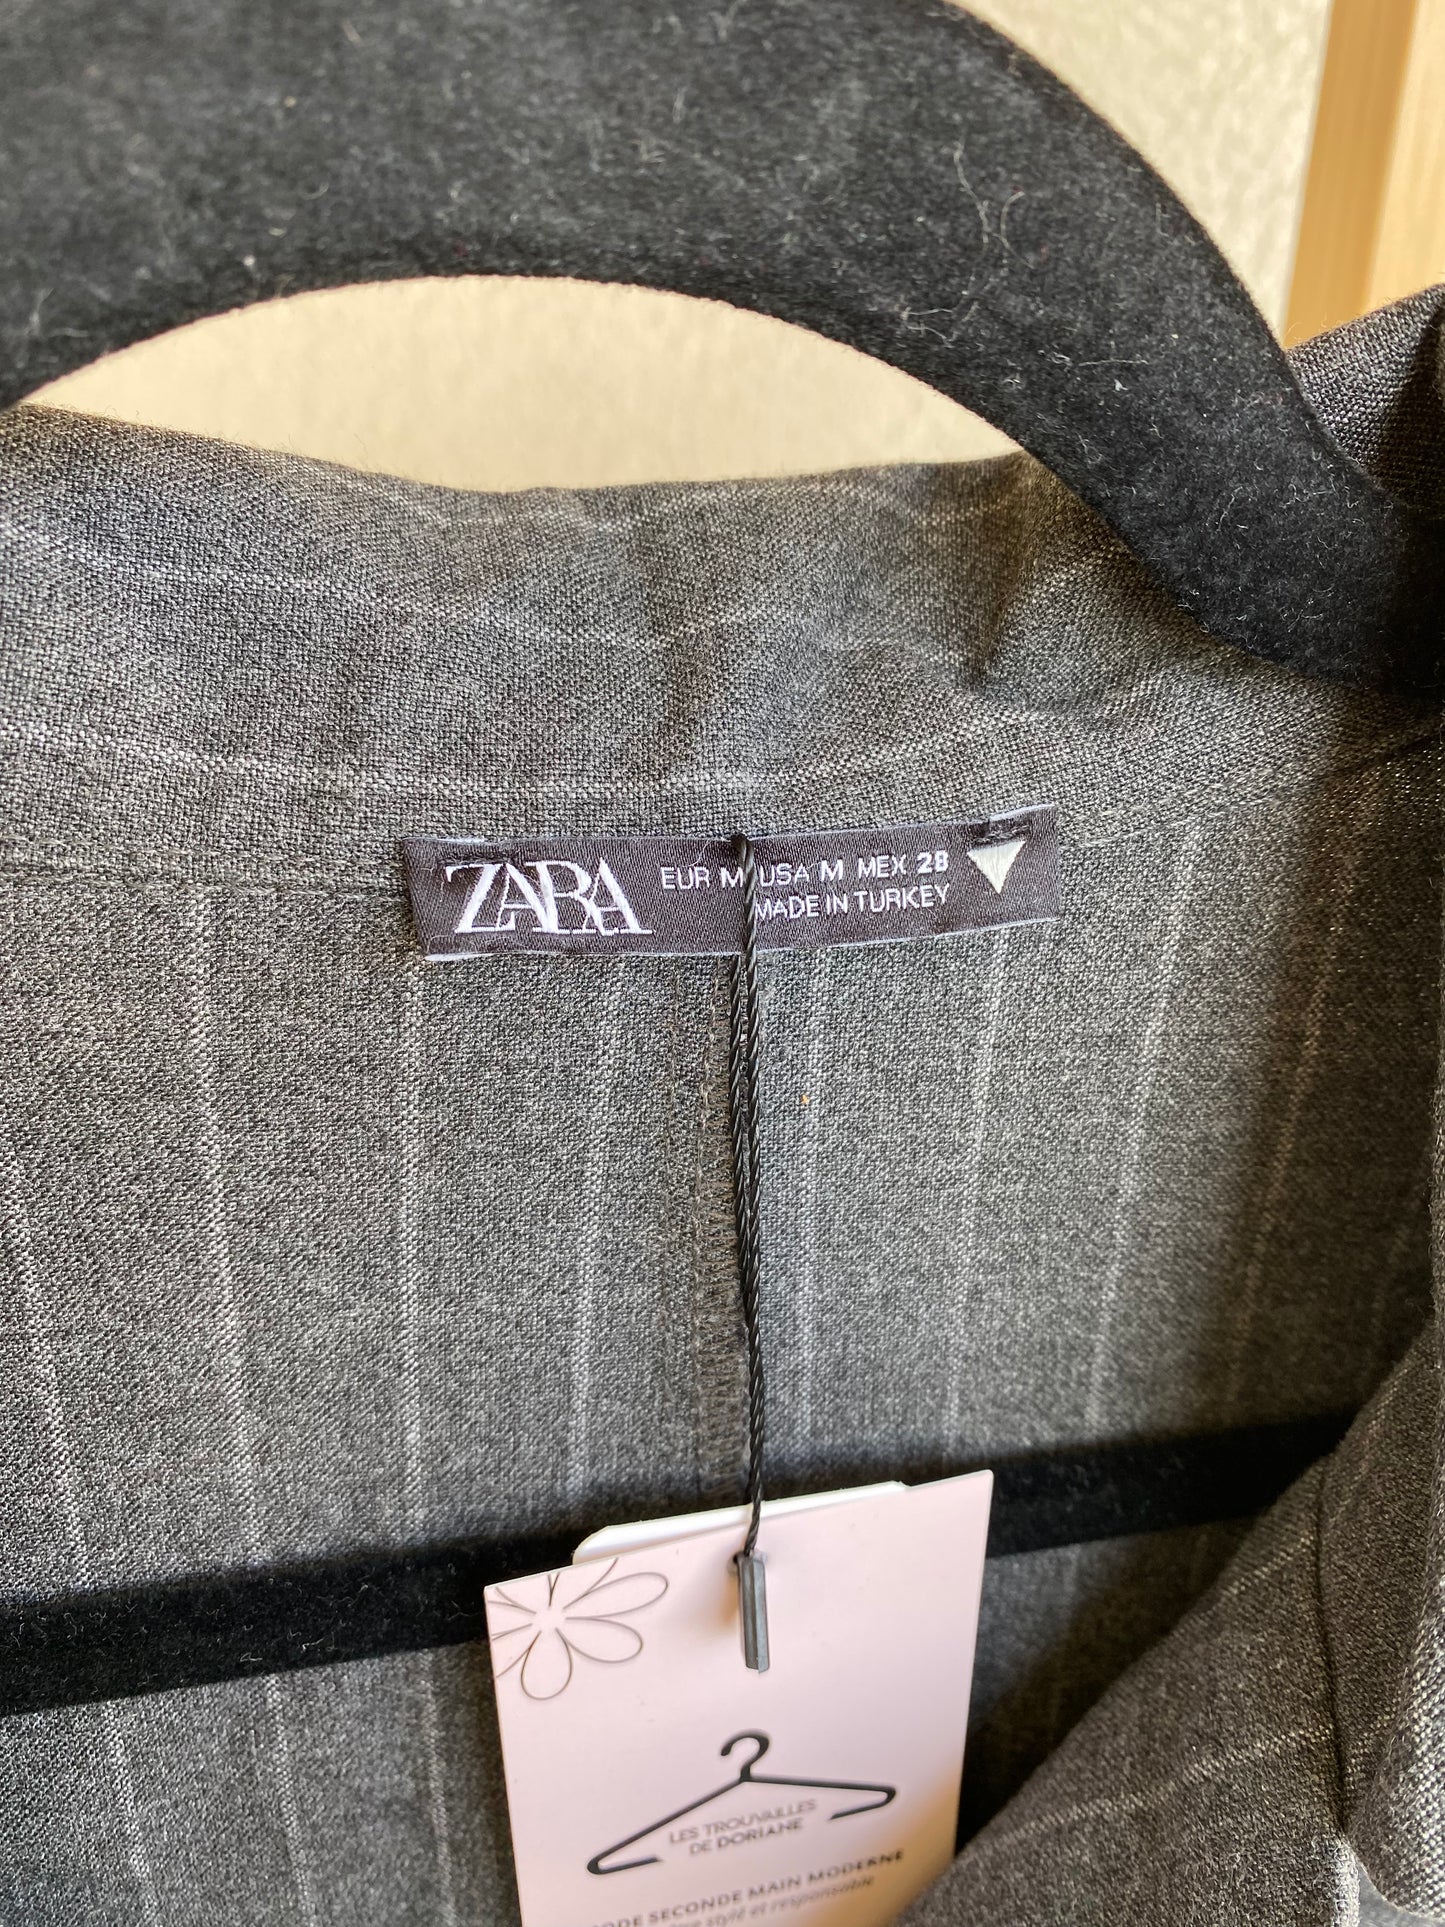 Combinaison Zara grise rayée Taille M